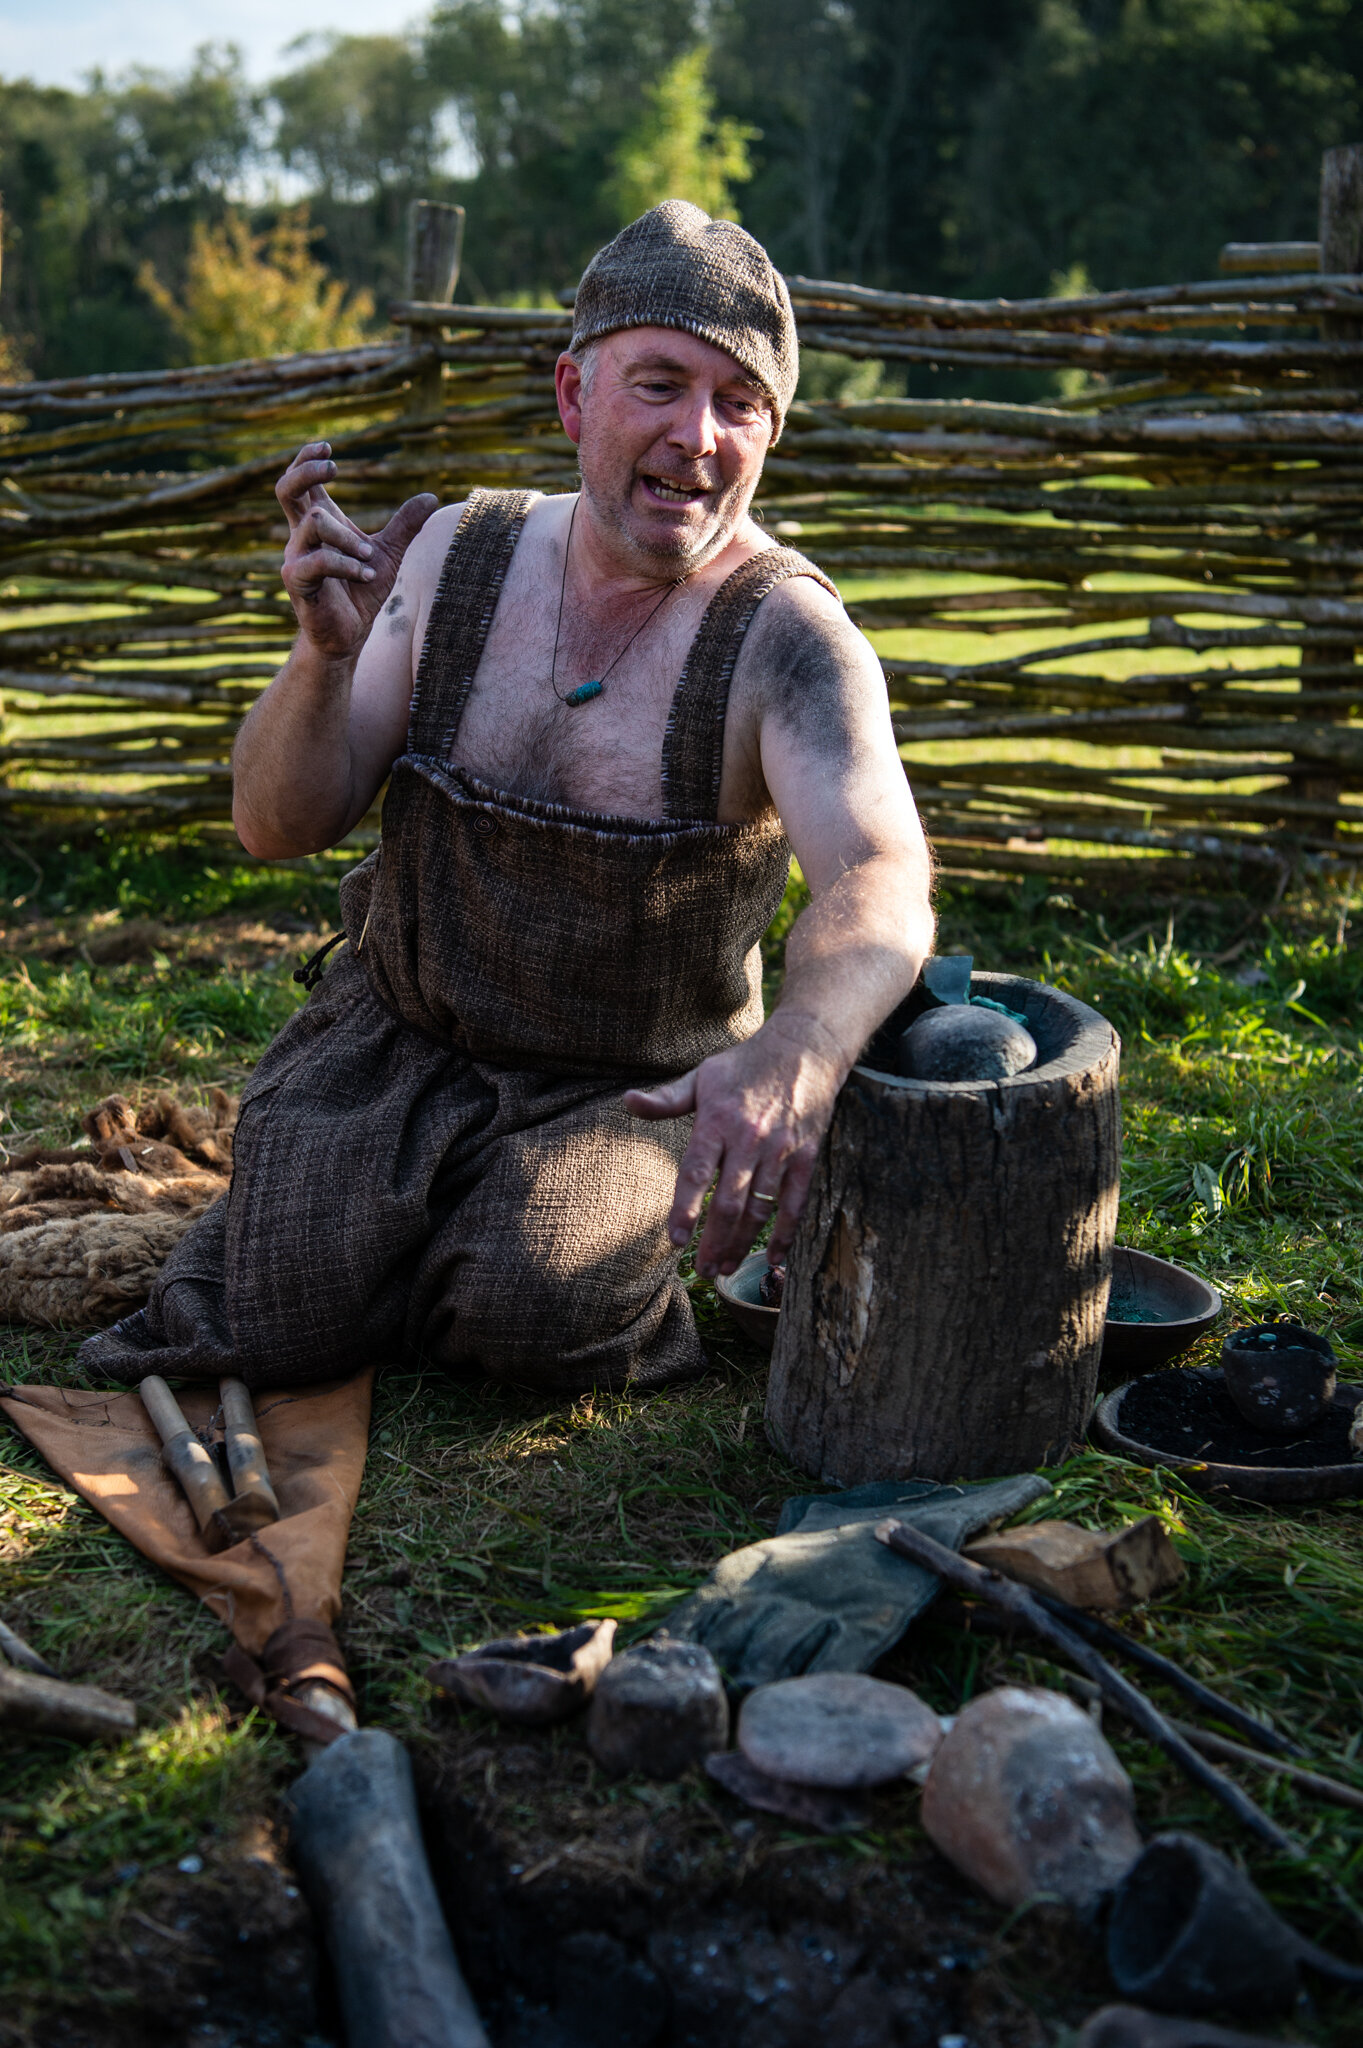 A reenactor demonstrates Bronze smelting